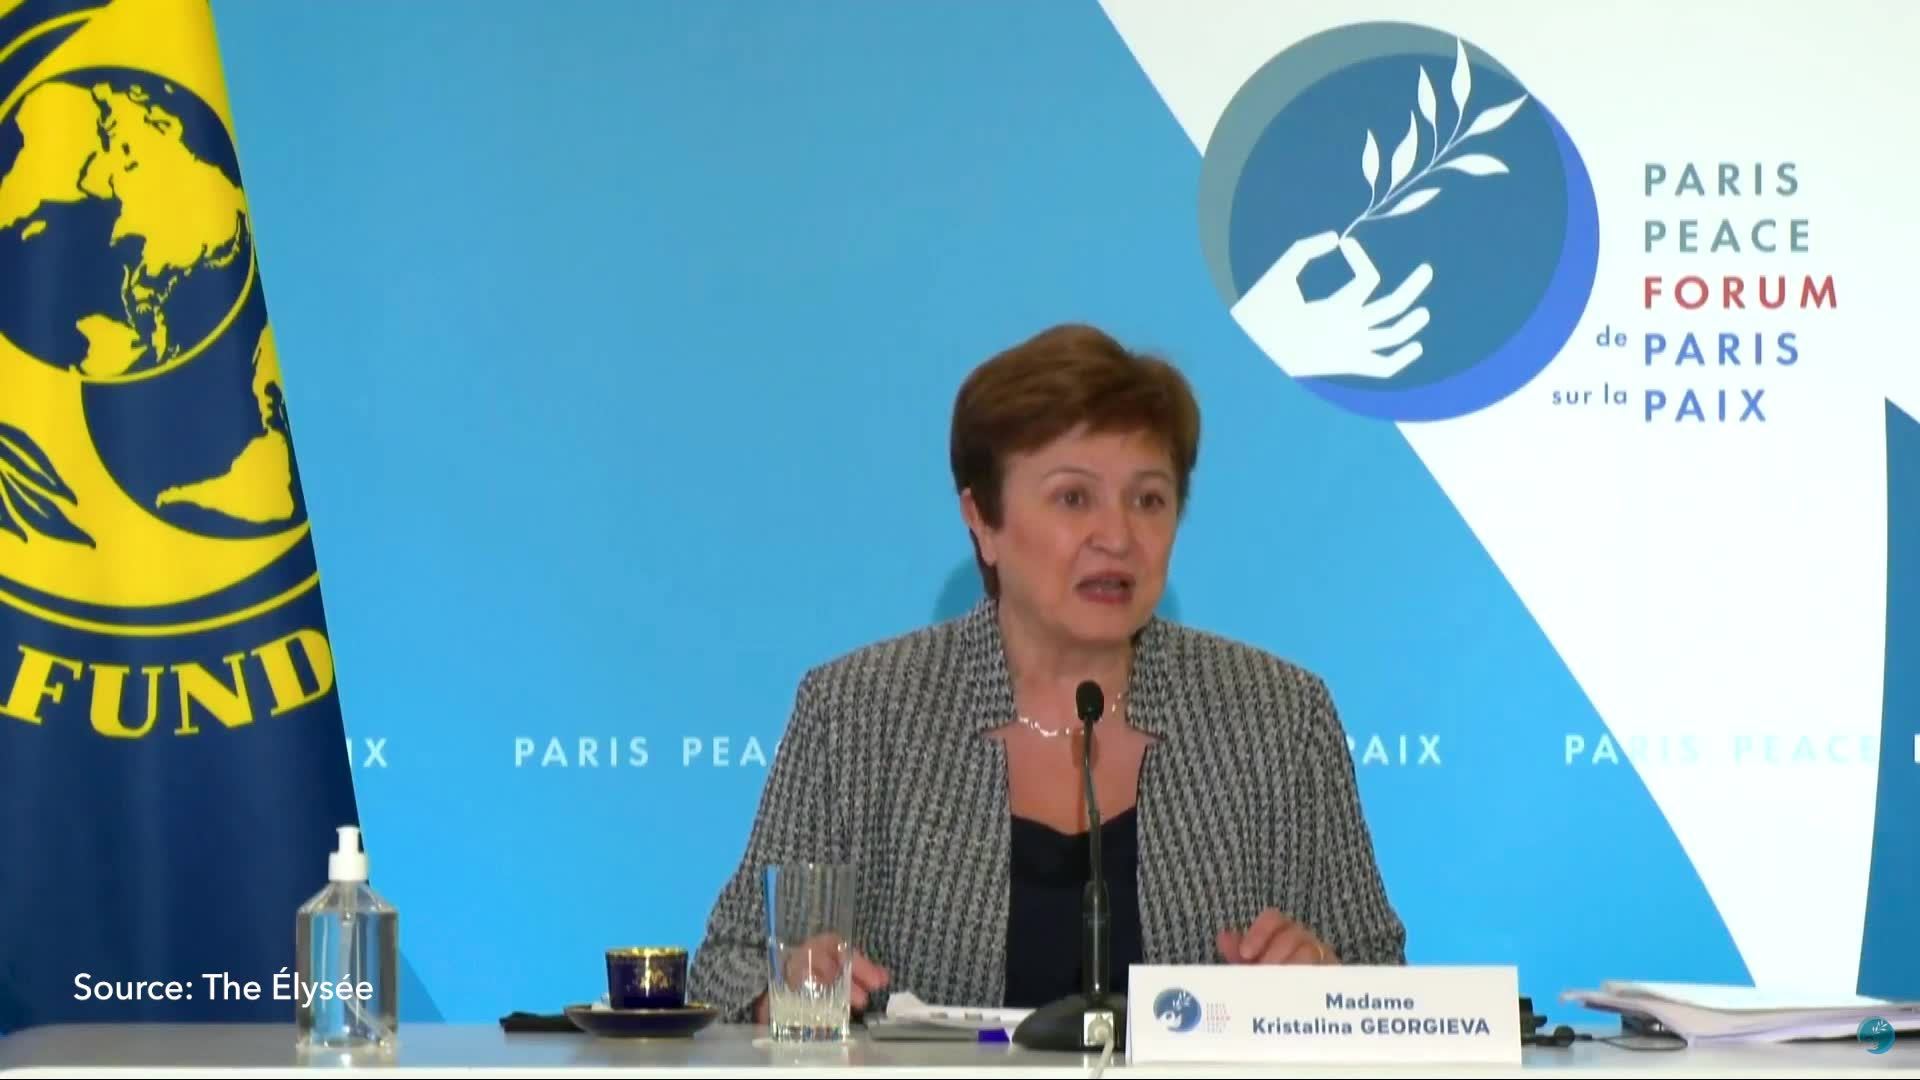 IMF / Kristalina Georgieva Remarks at Paris Peace Forum